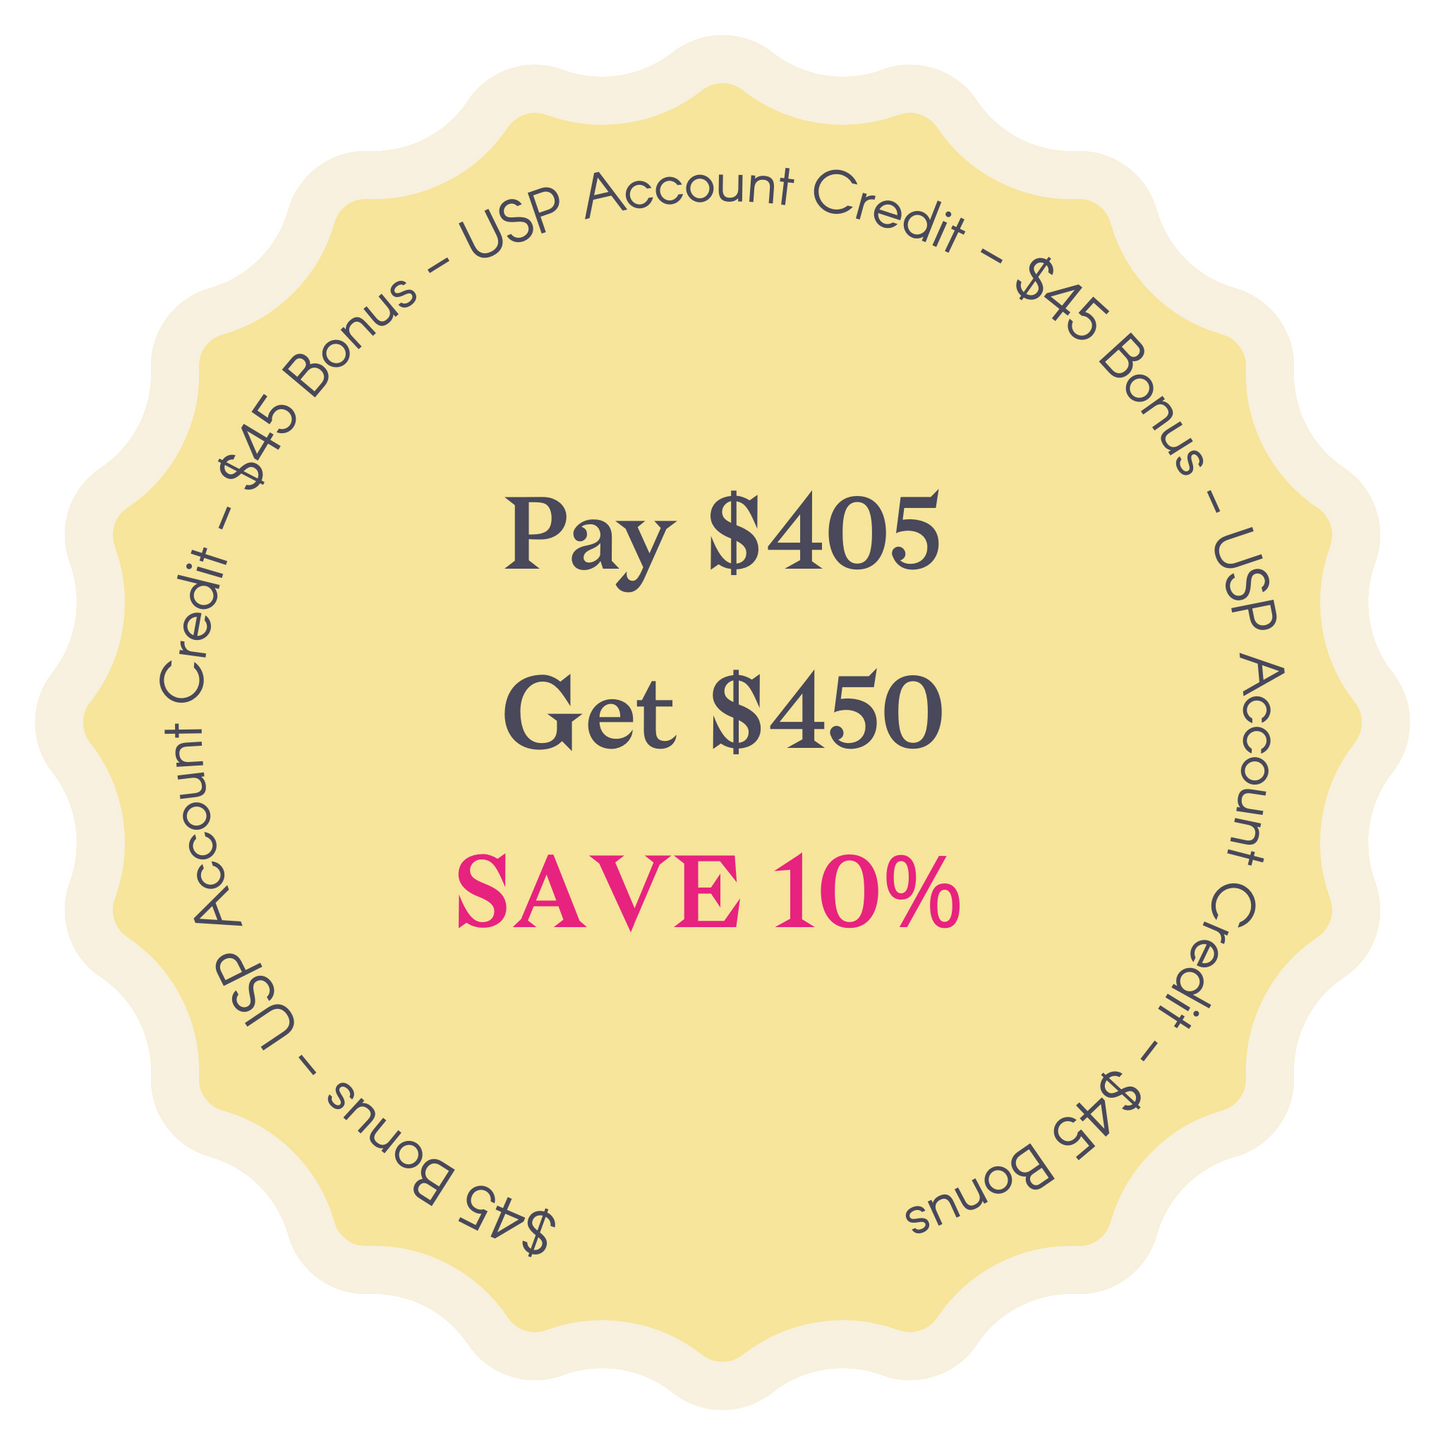 USP Credit $450 - Save 10%